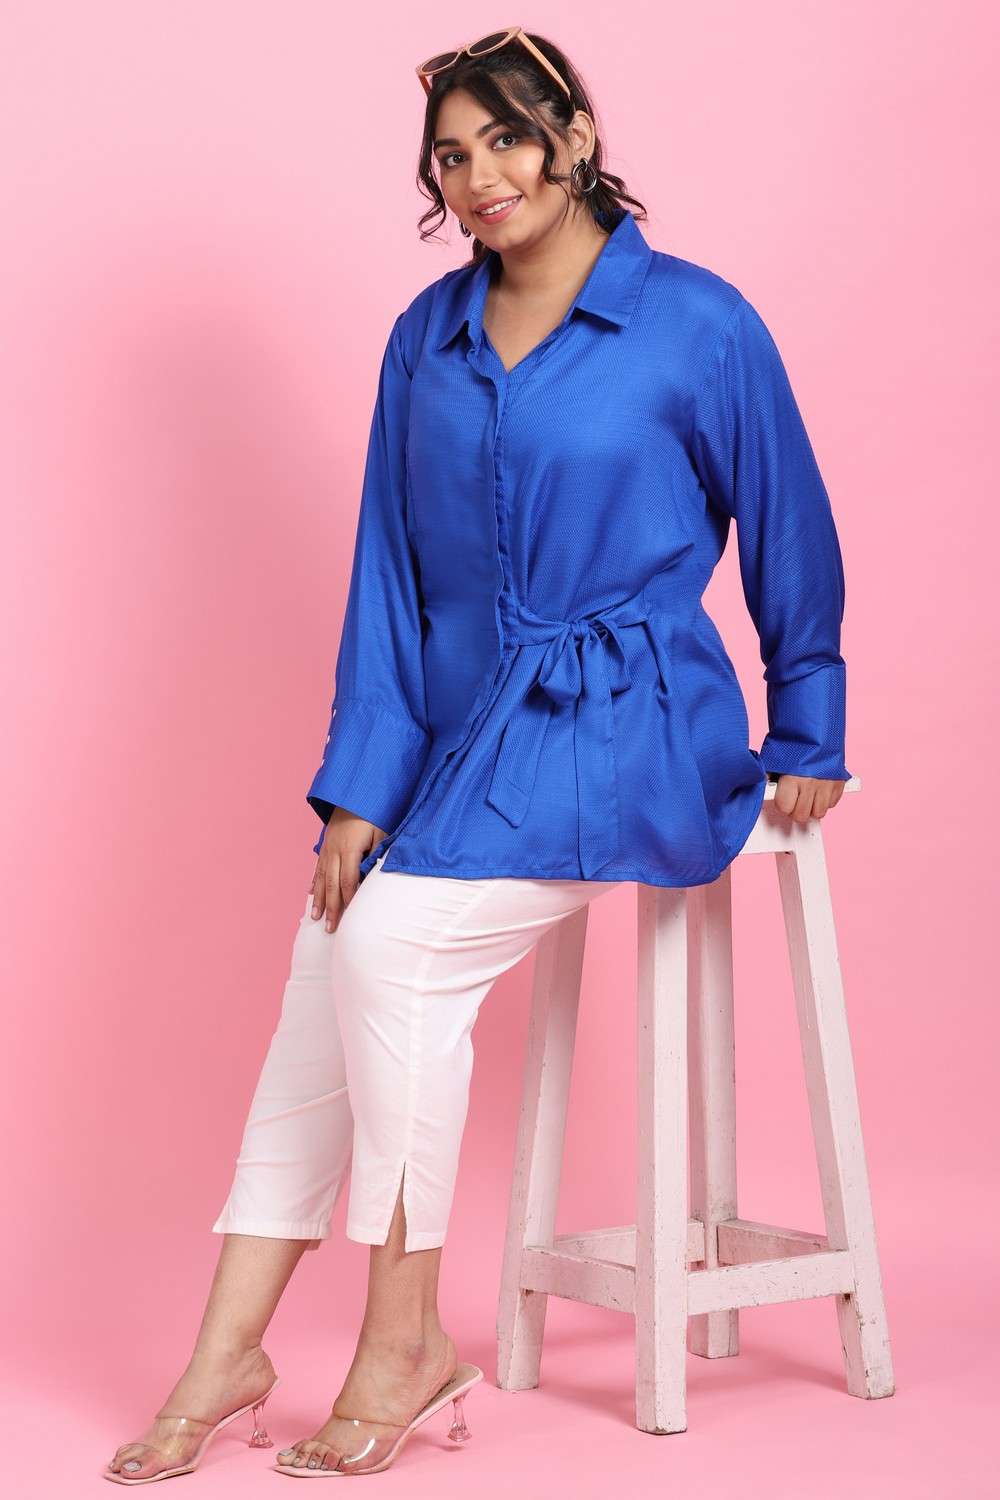 LASTINCH Plus Size Exotic Blue Shirt for Women - Upto 8XL